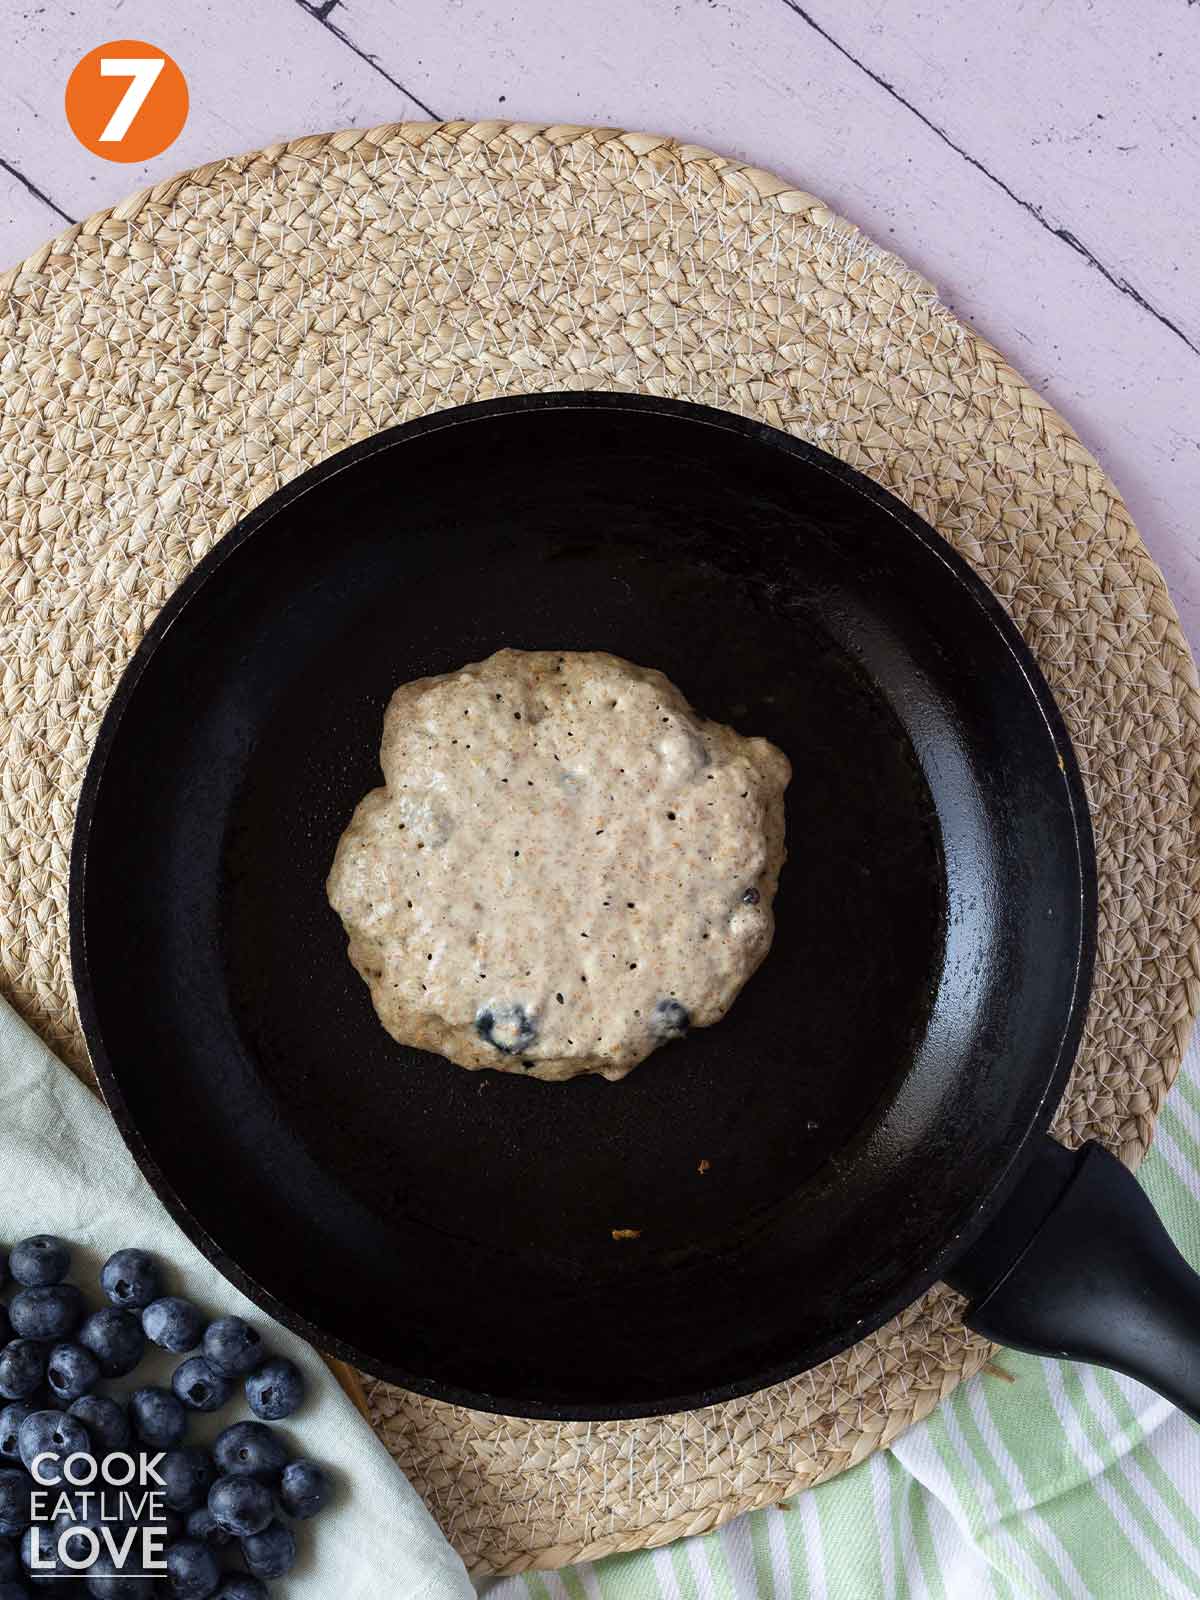 Vegan blueberry chia pancakes cooking in a pan ready to flip.